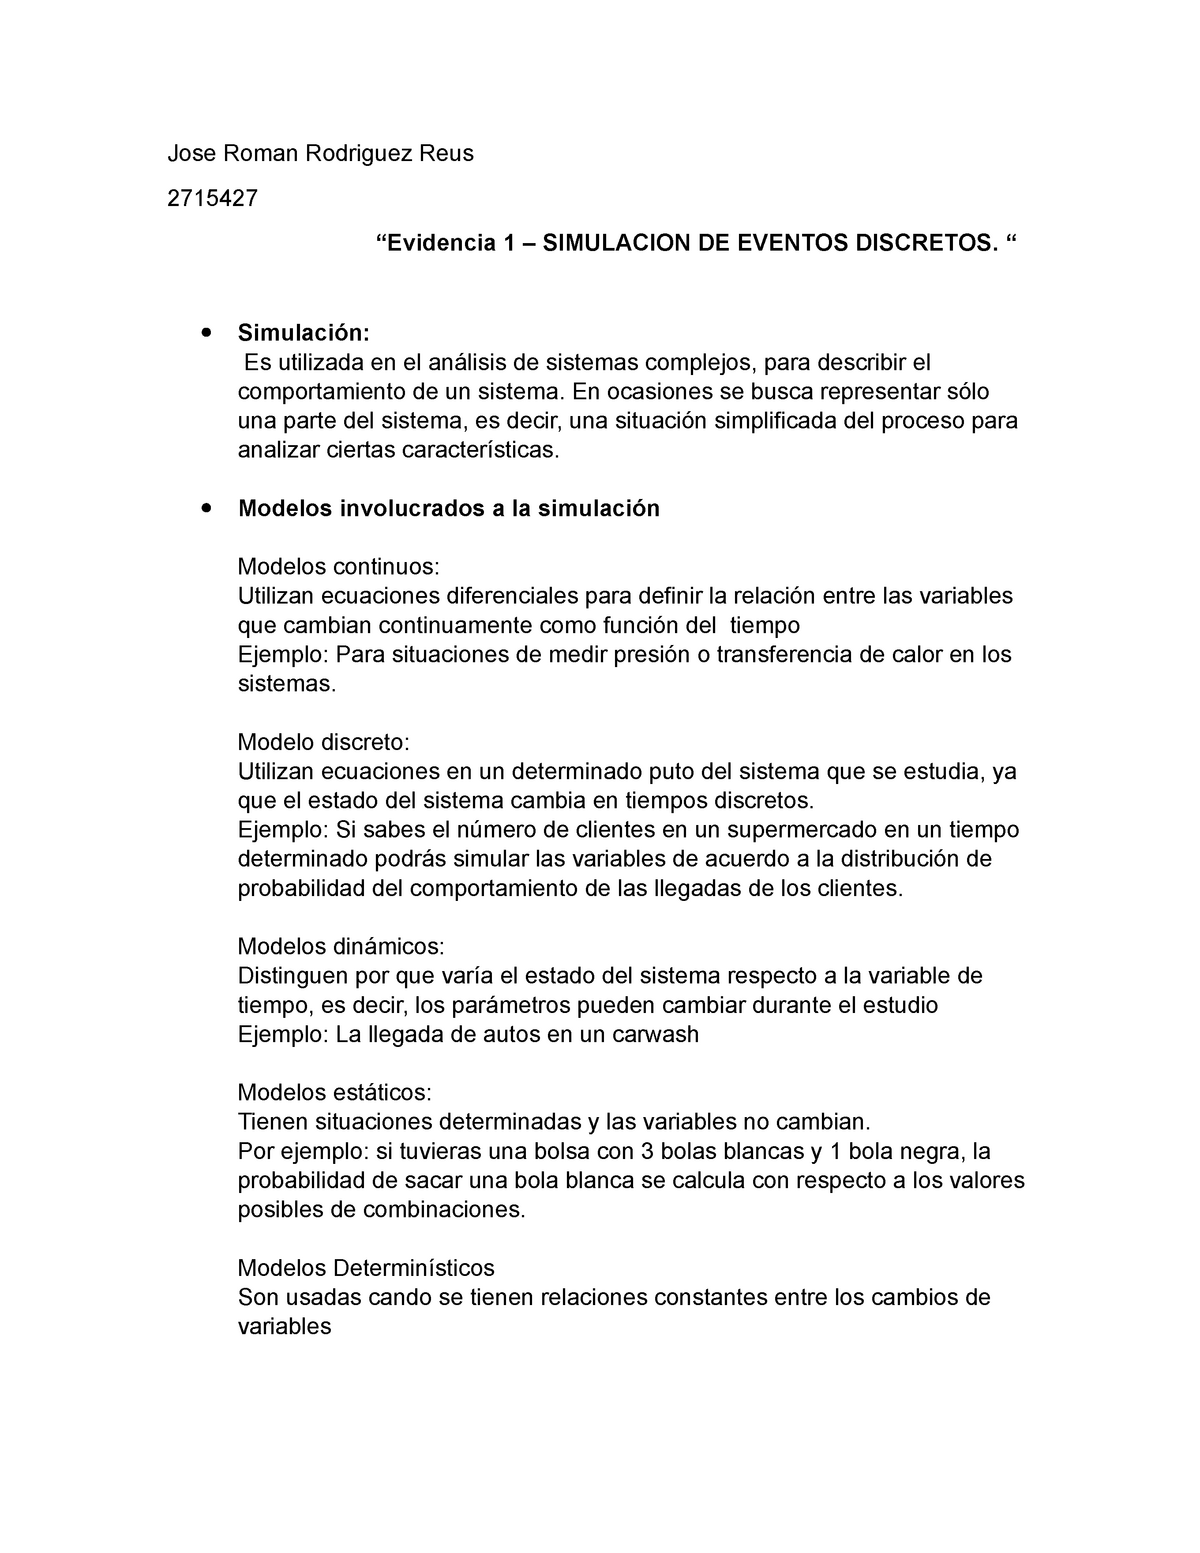 EV 1 Simulacion - Apuntes 1-5 - Jose Roman Rodriguez Reus 2715427  “Evidencia 1 – SIMULACION DE - Studocu